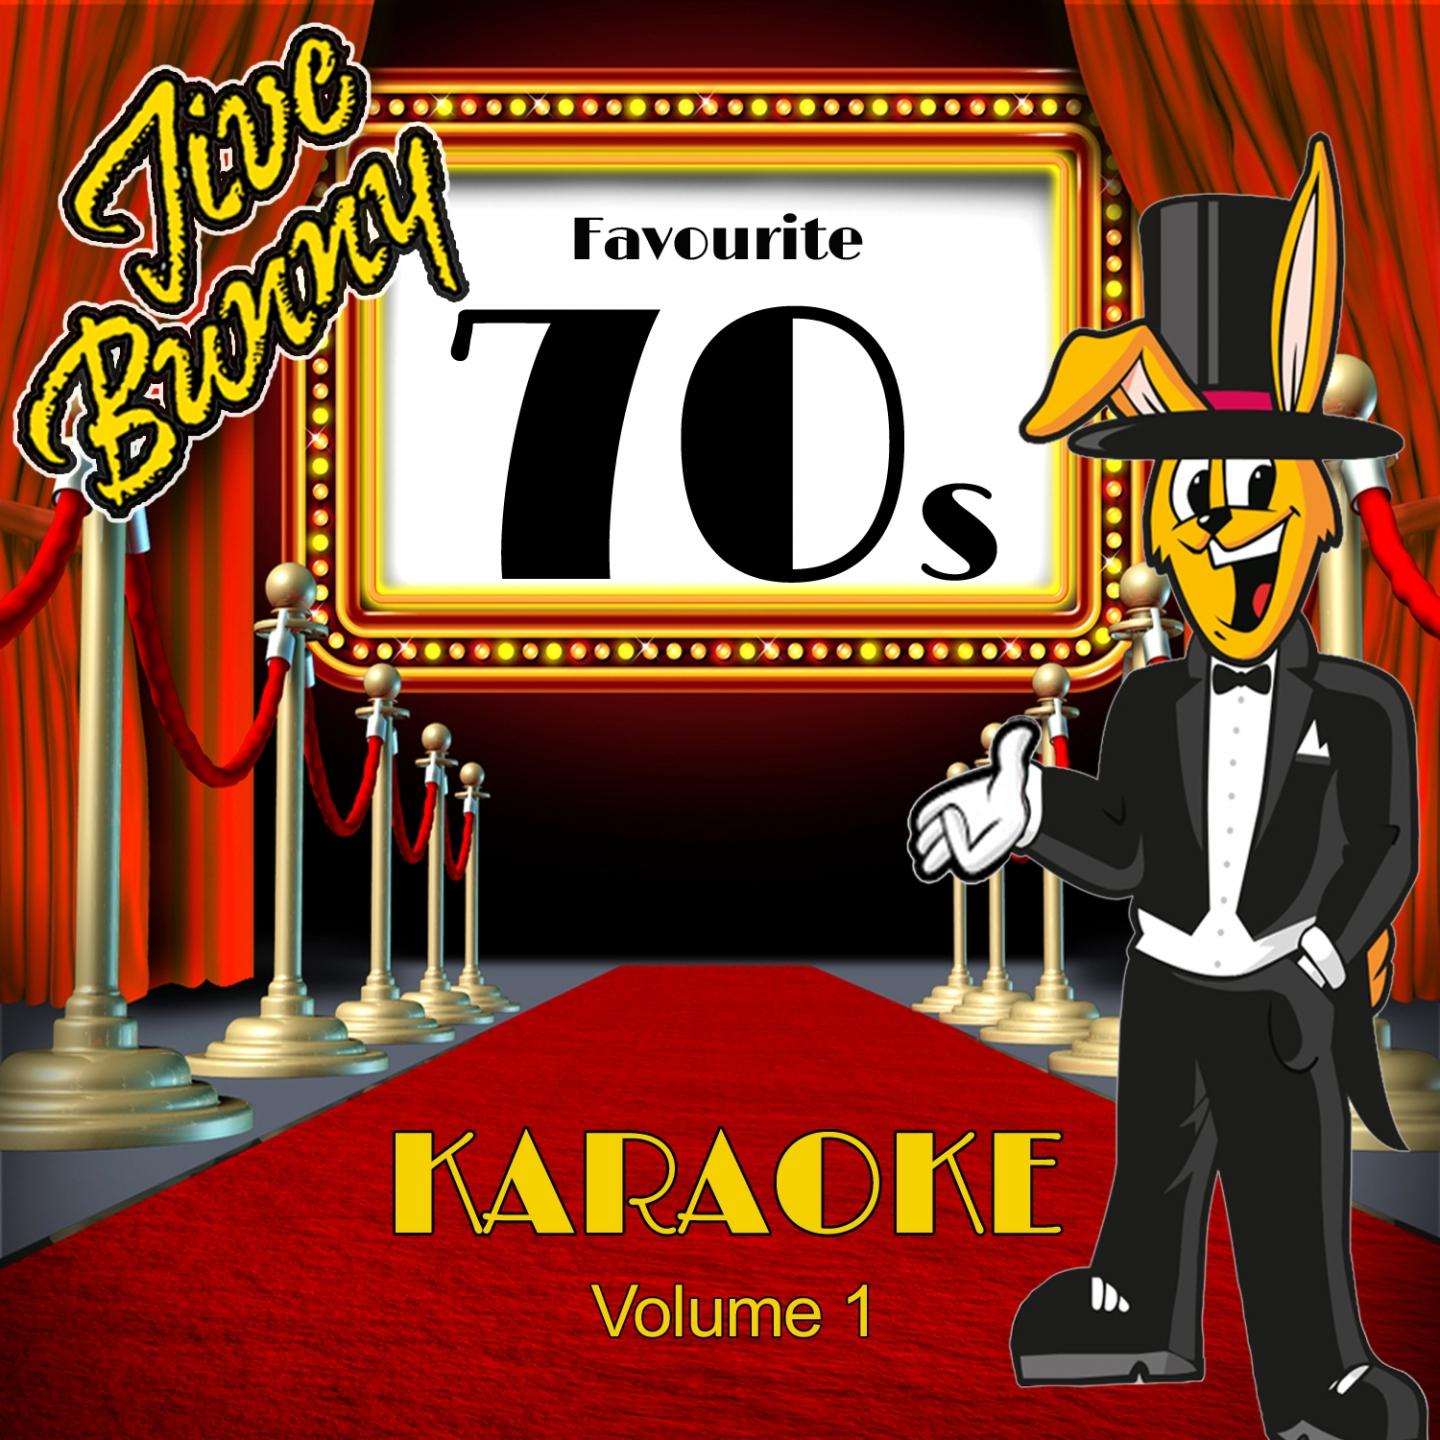 Jive Bunny's Favourite 70's Album - Karaoke, Vol. 1